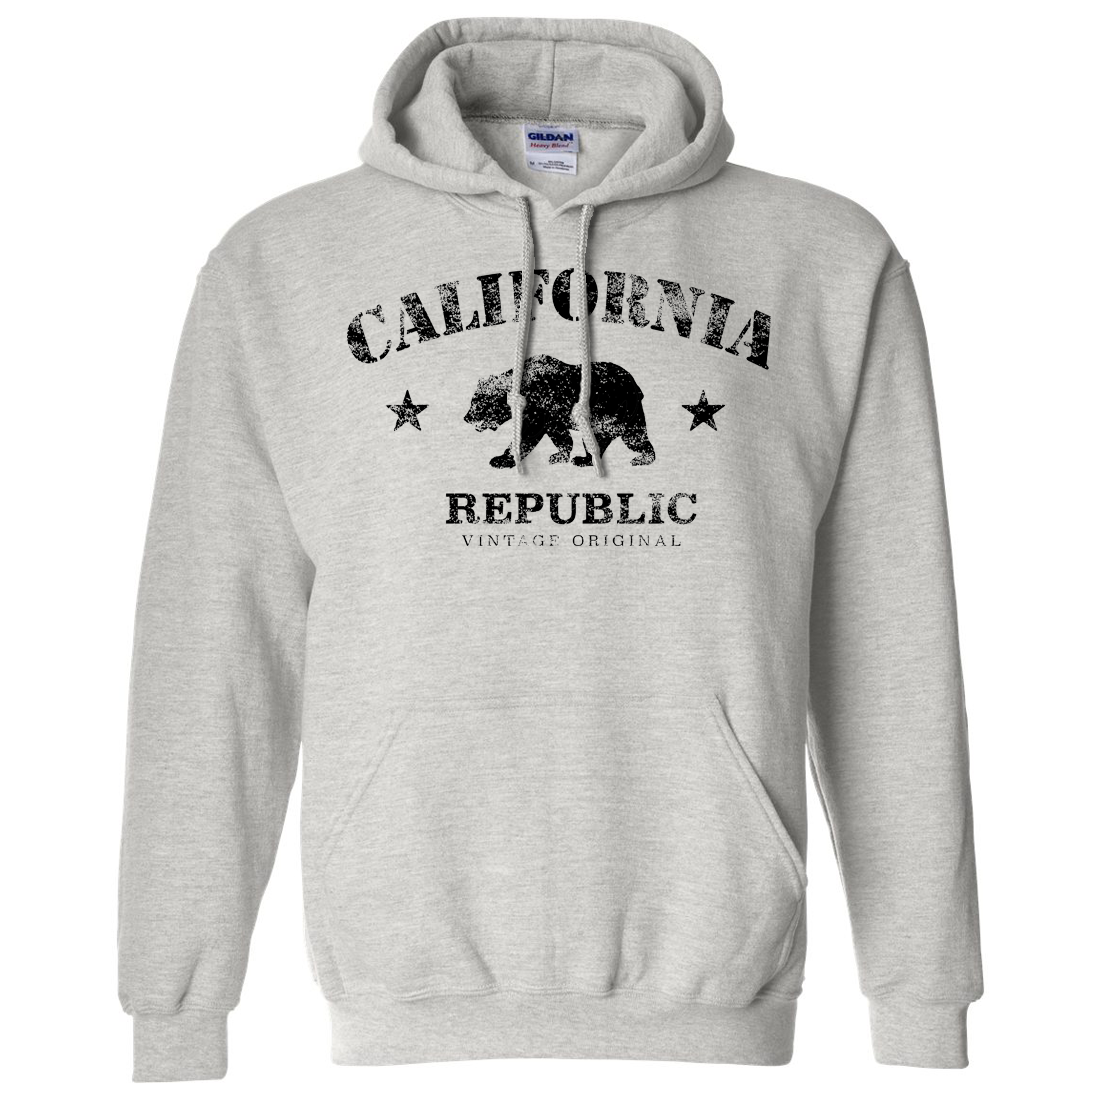 California Republic Vintage Original Sweatshirt Hoodie